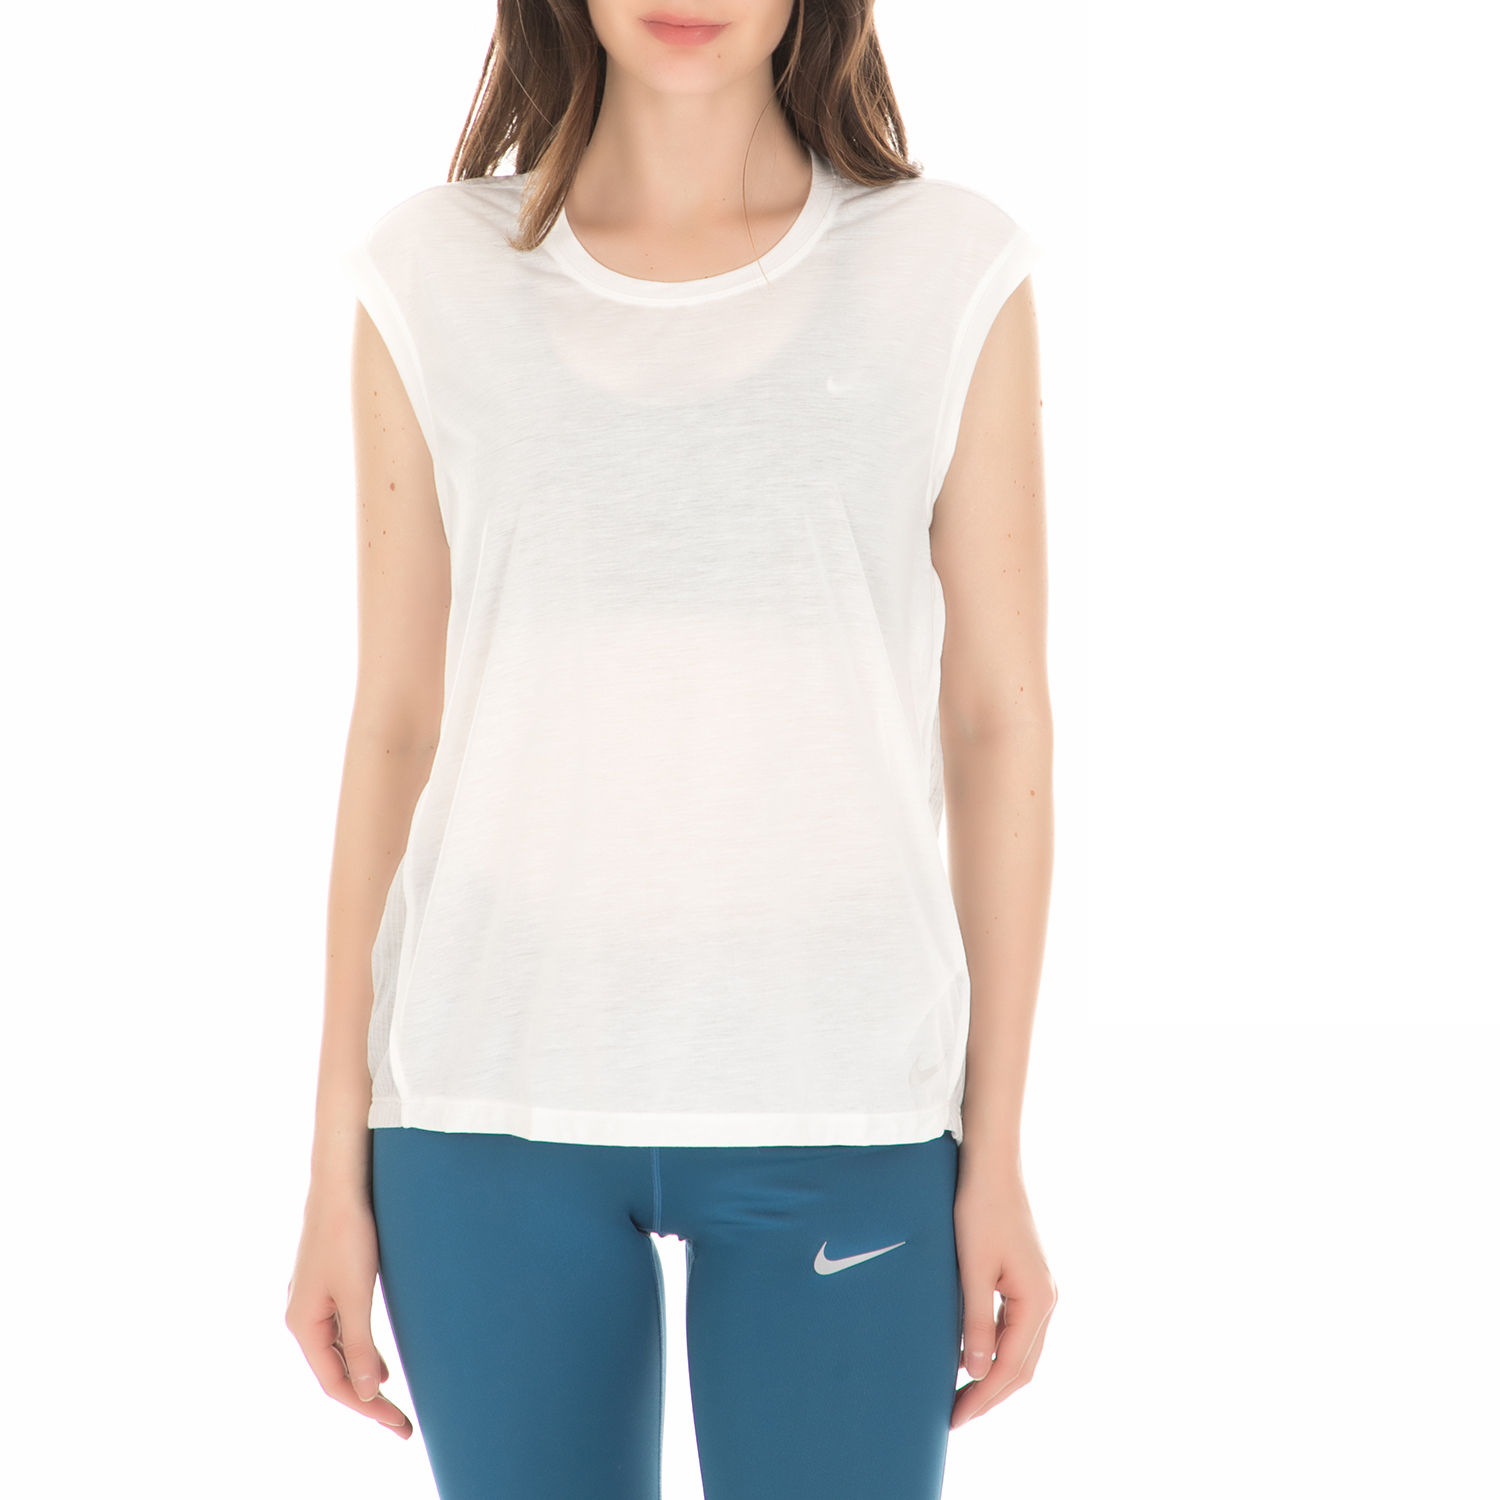 NIKE - Γυναικεία αμάνικη μπλούζα NIKE BREATHE λευκή Γυναικεία/Ρούχα/Μπλούζες/Αμάνικες